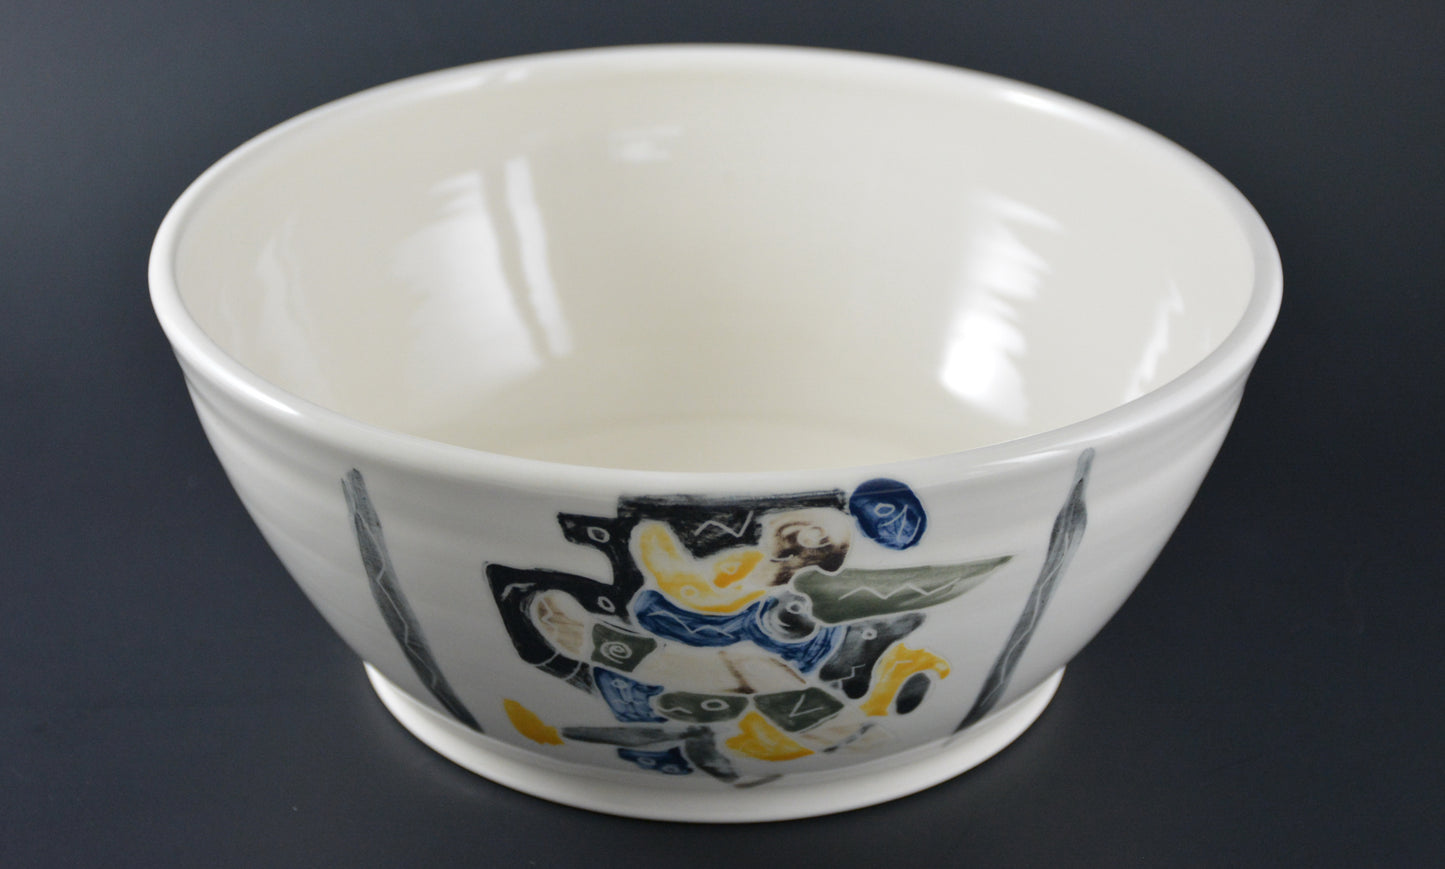 BL-31 Ceramic Bowl - Porcelain bowl